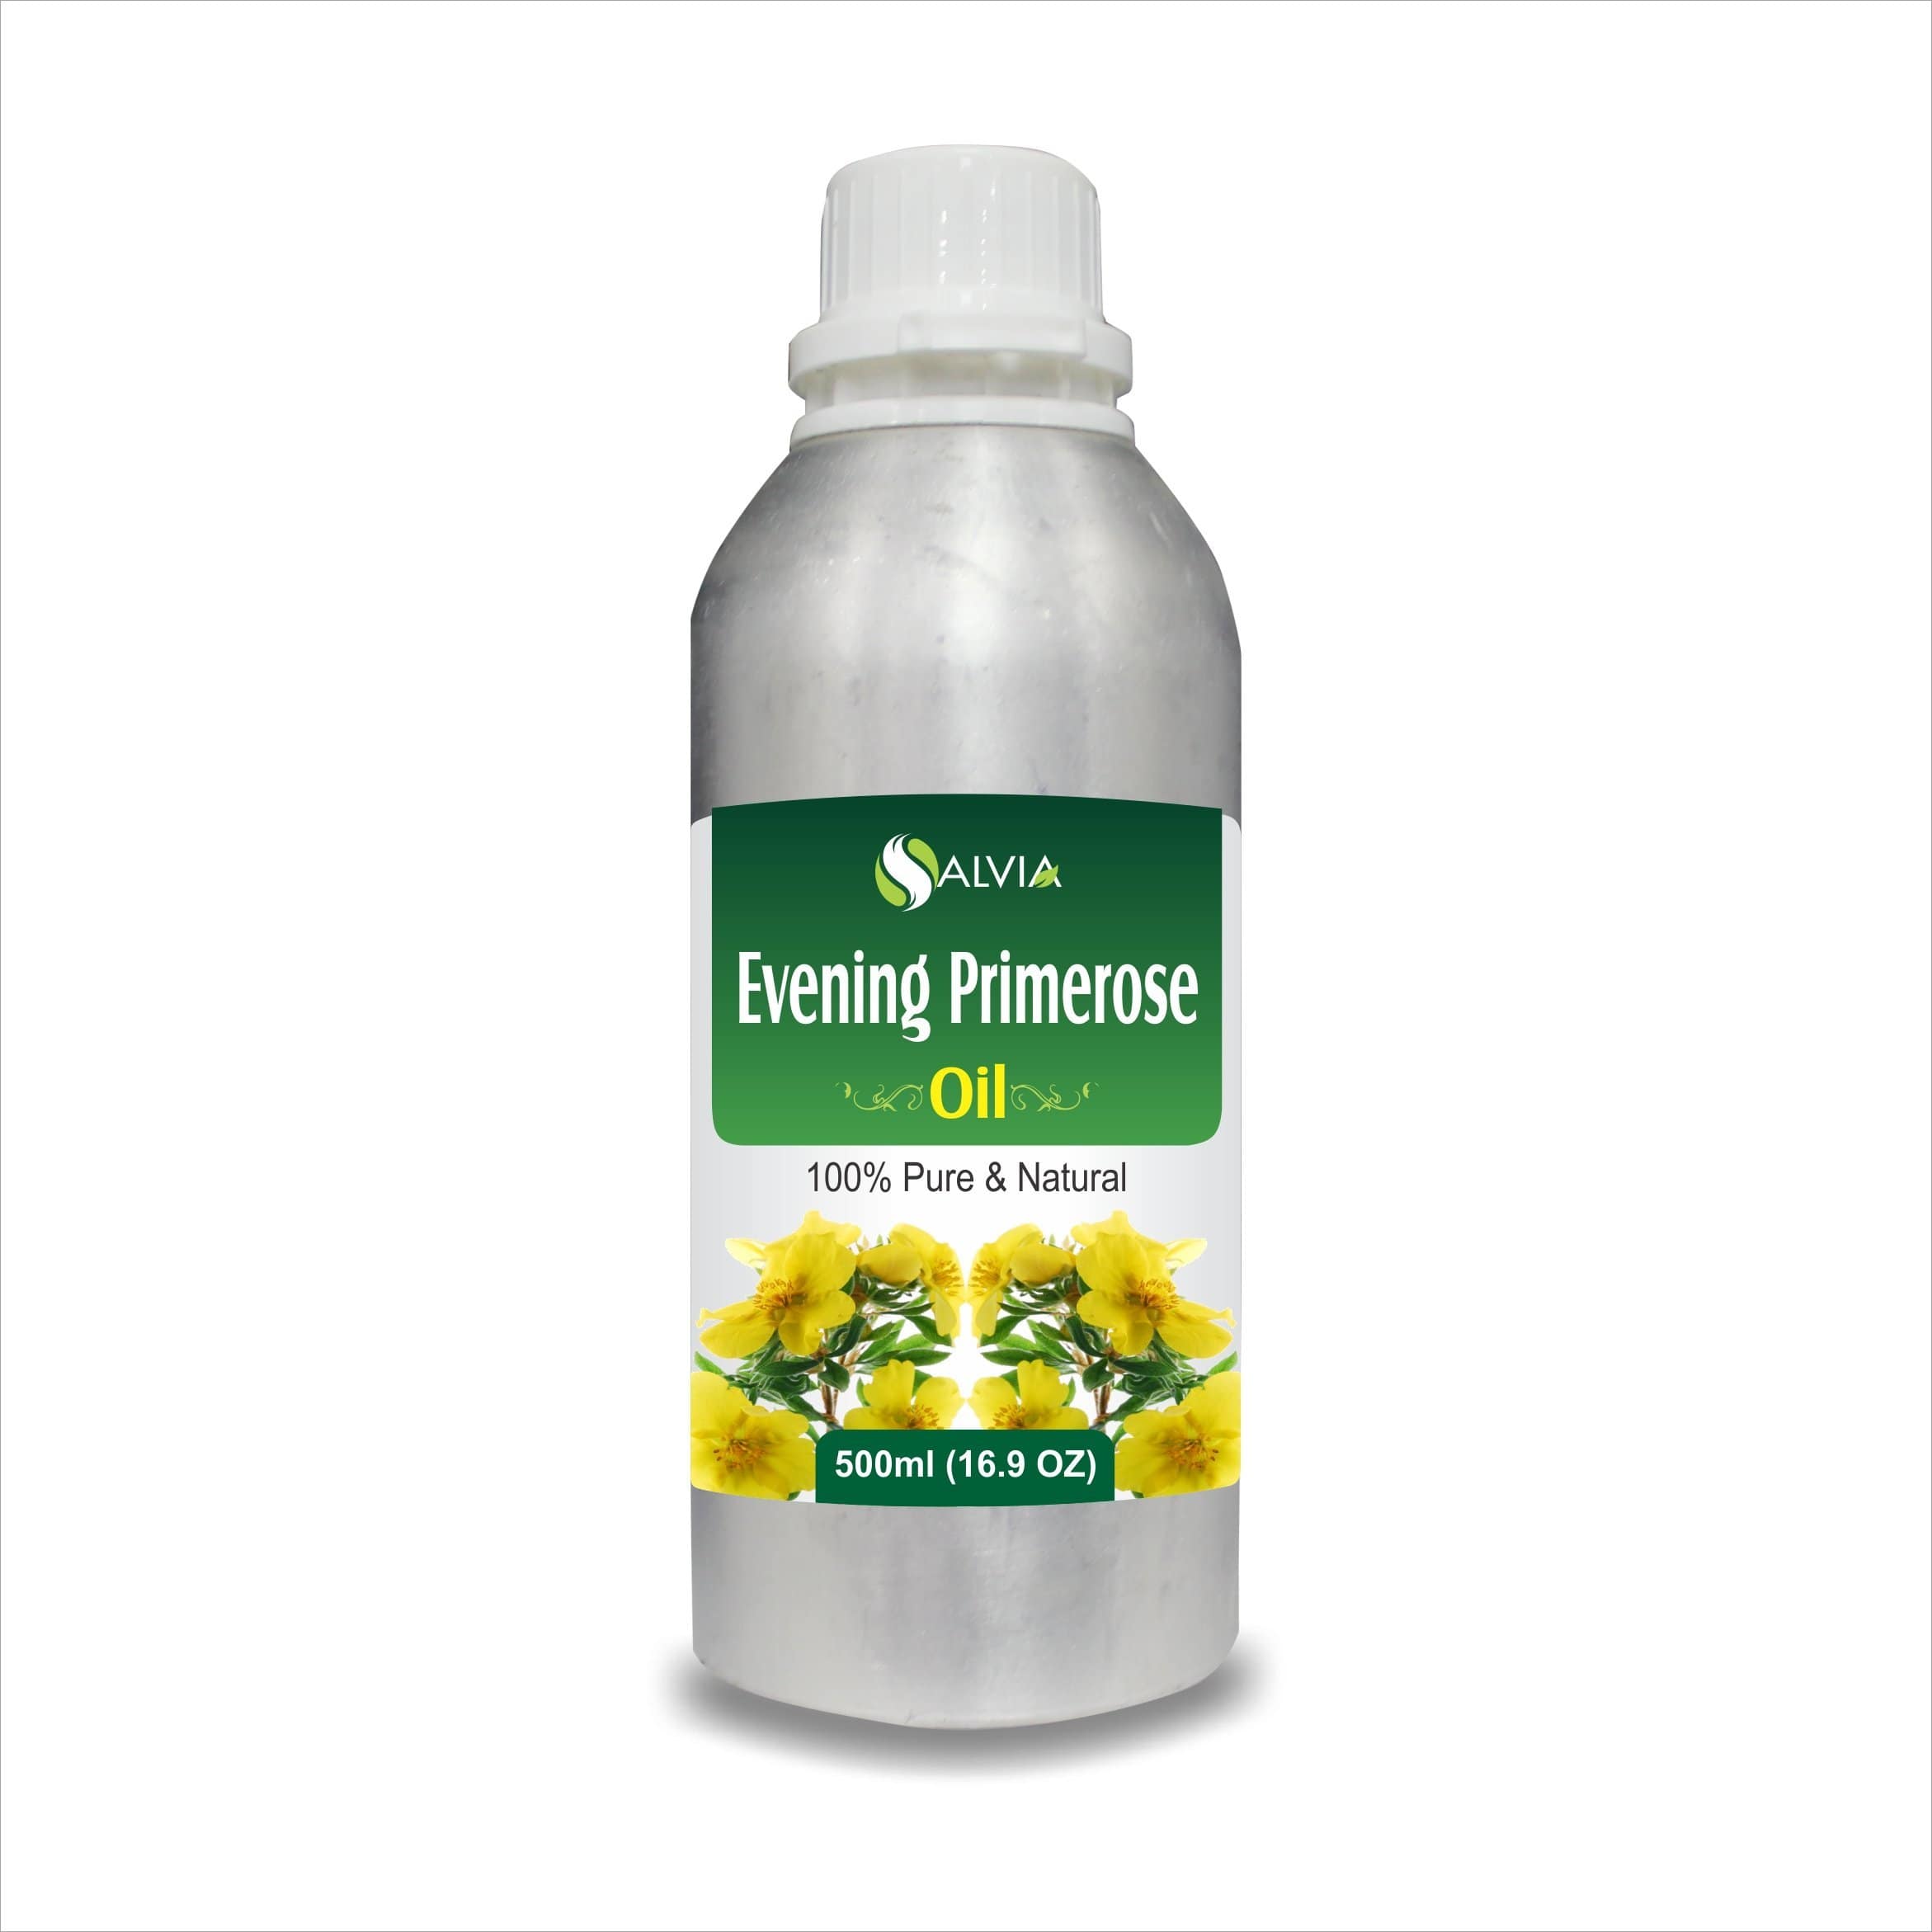 evening primrose oil for skin